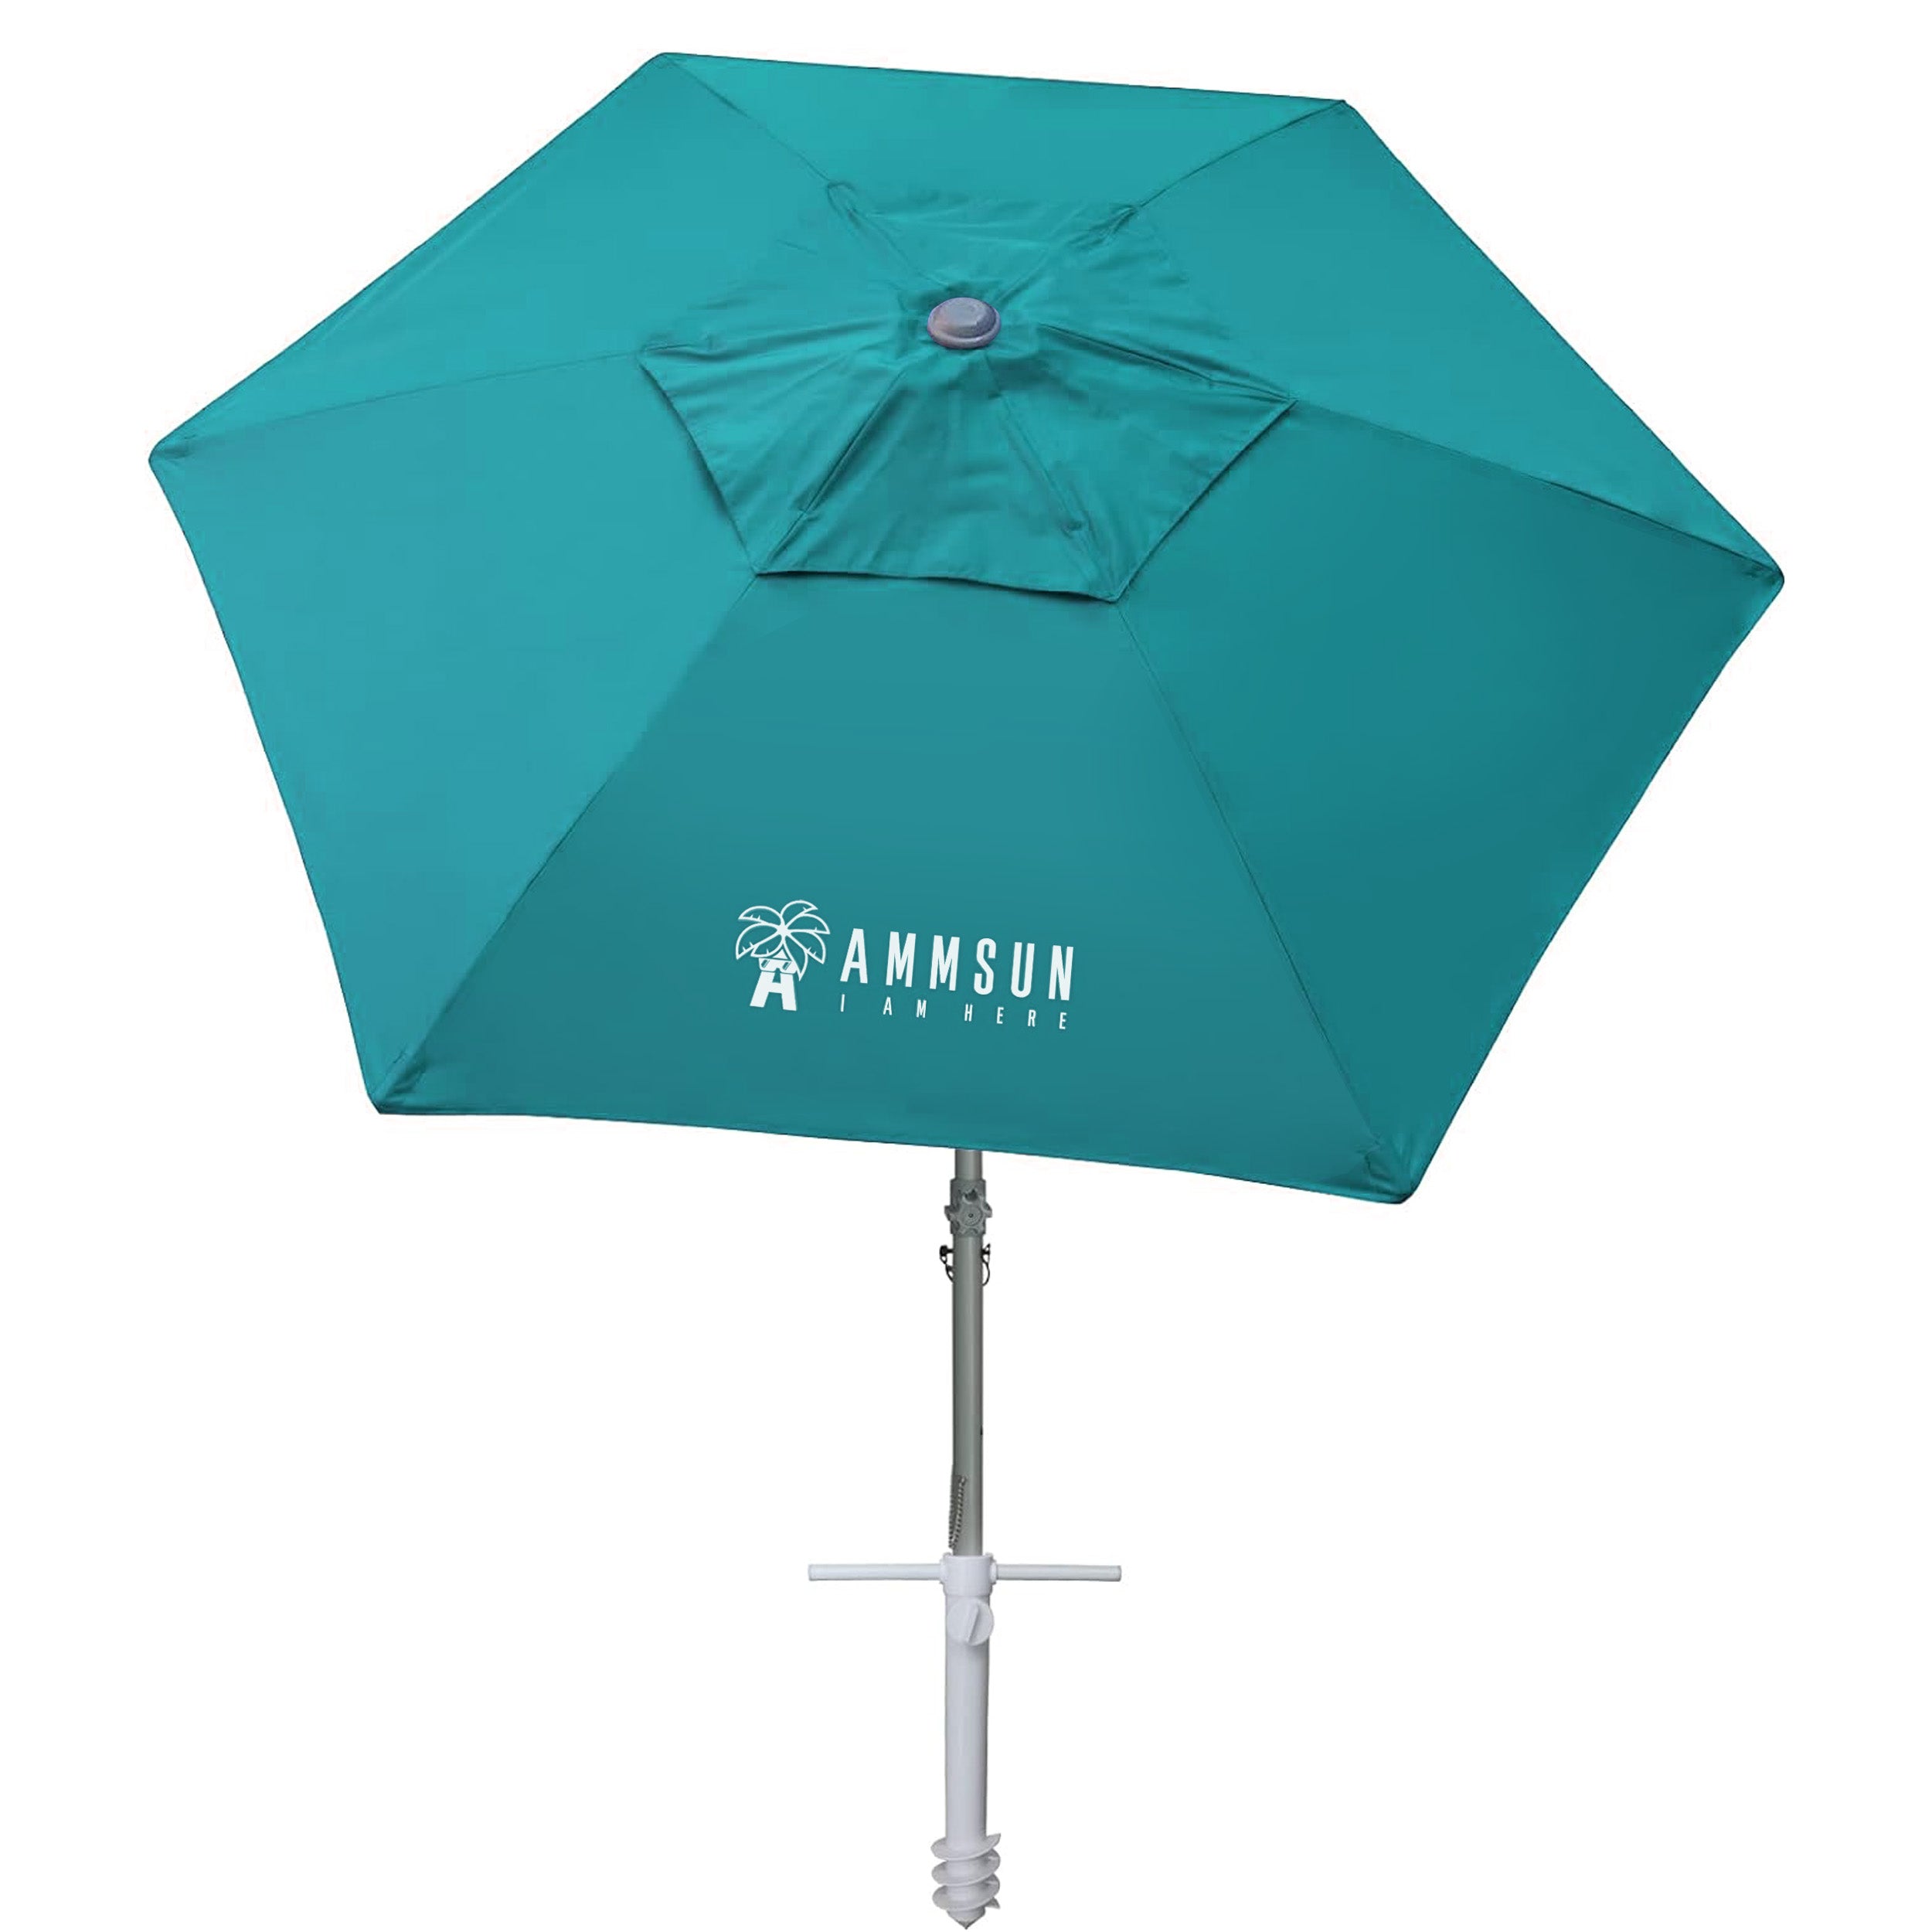 AMMSUN 8ft Heavy Duty Commercial Grade Beach Umbrella Teal